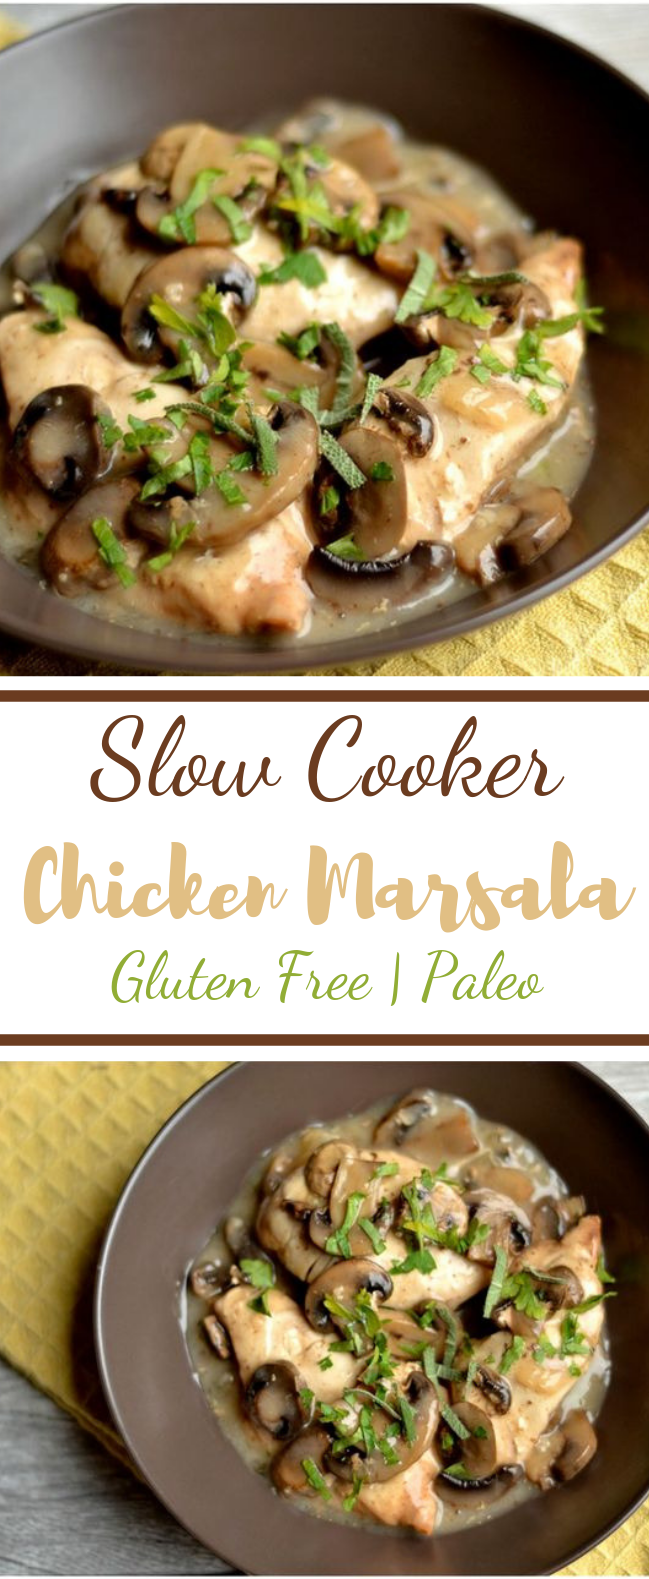 Slow Cooker Chicken Marsala #Paleo #Healthy